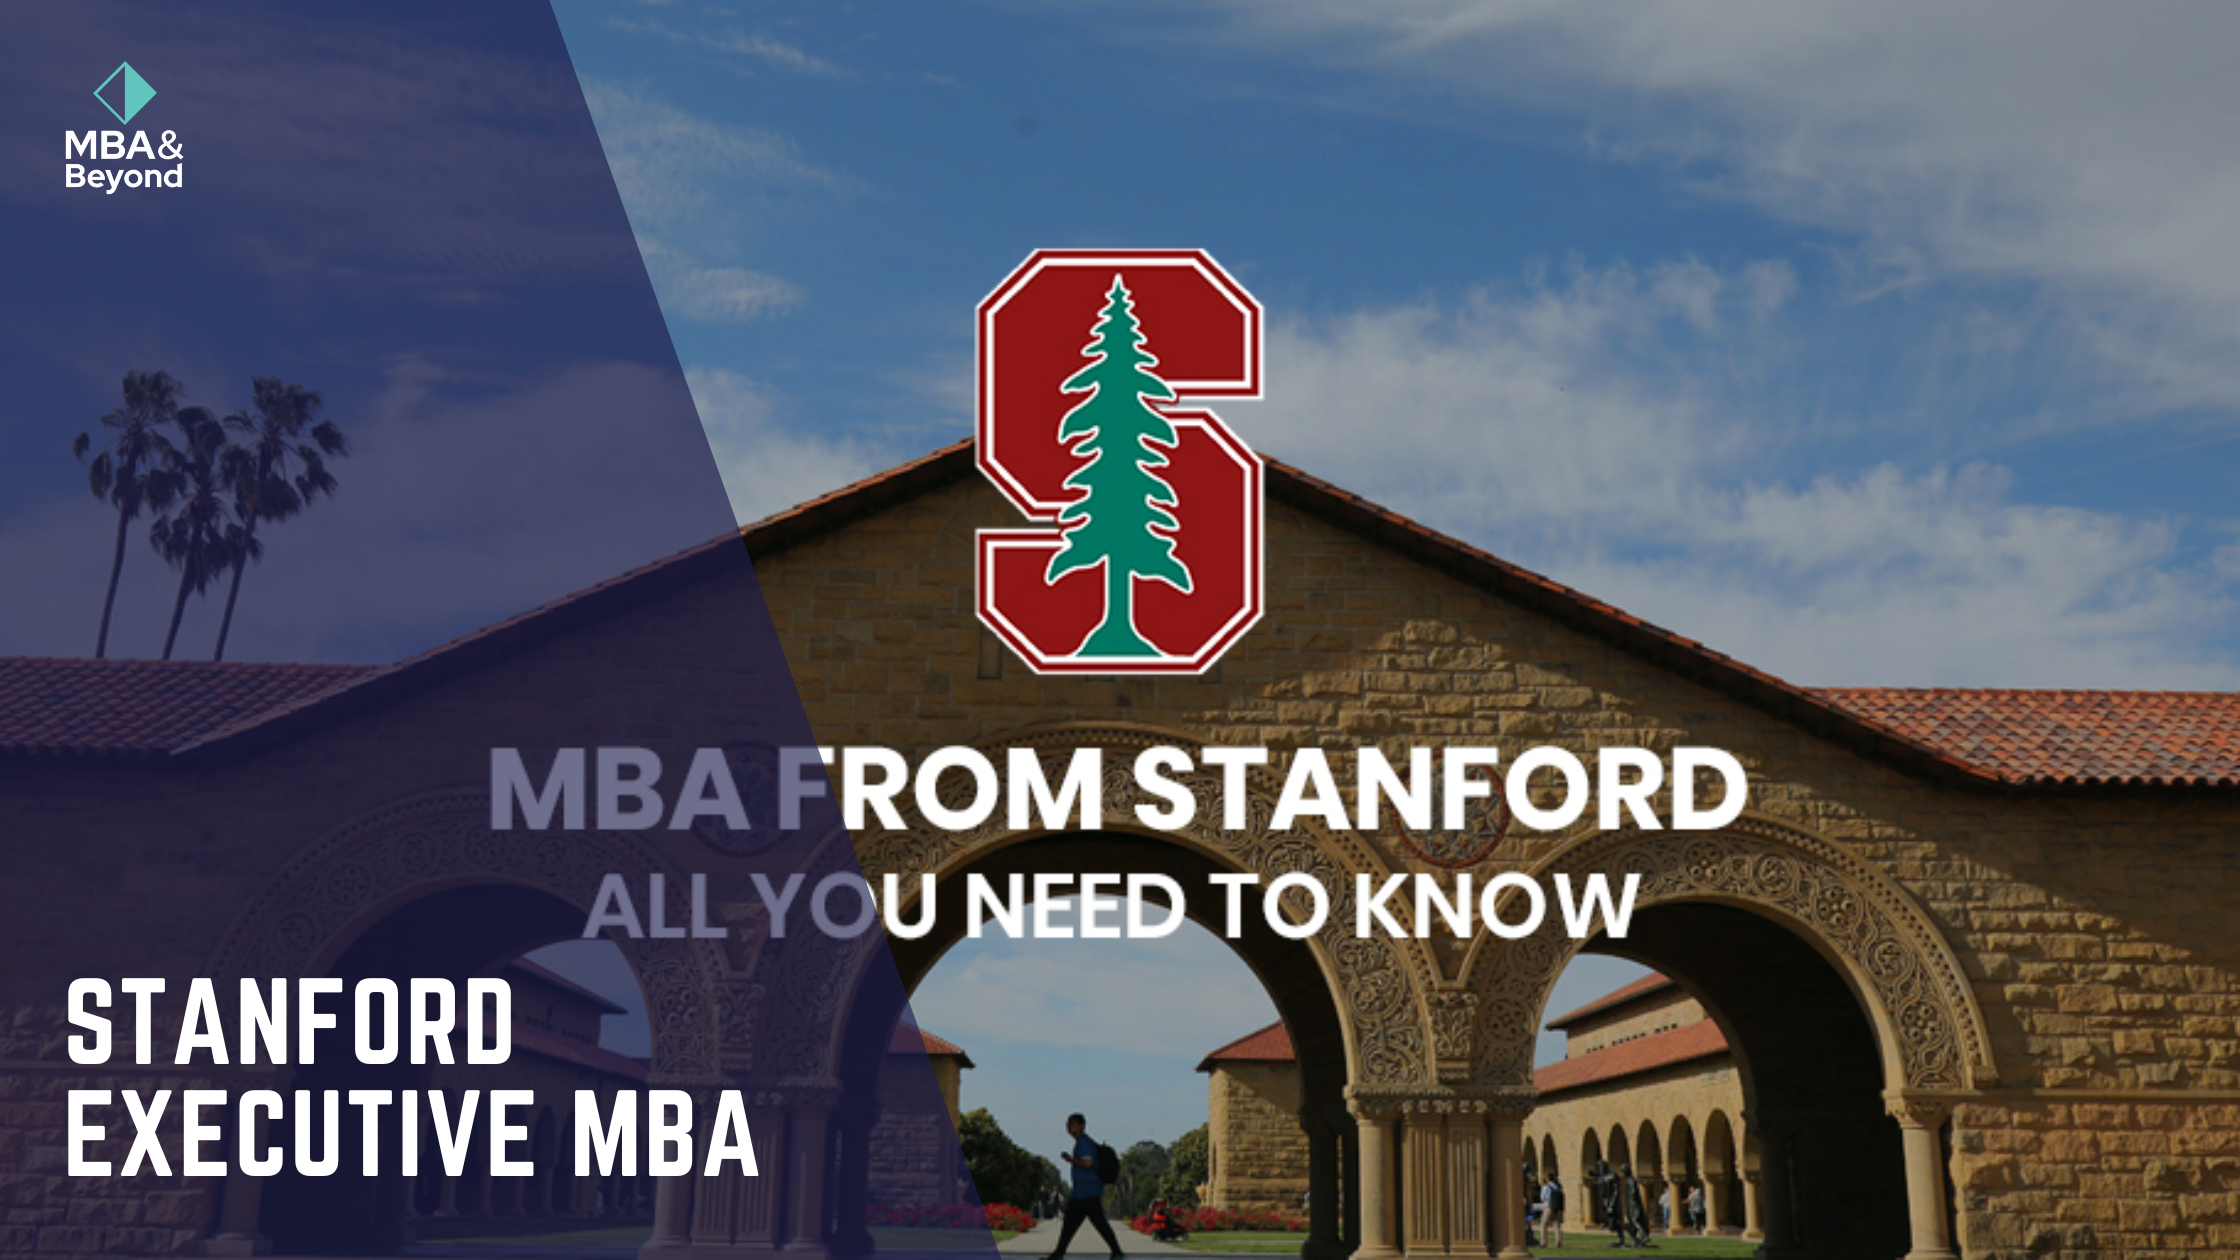 Stanford Executive MBA Program